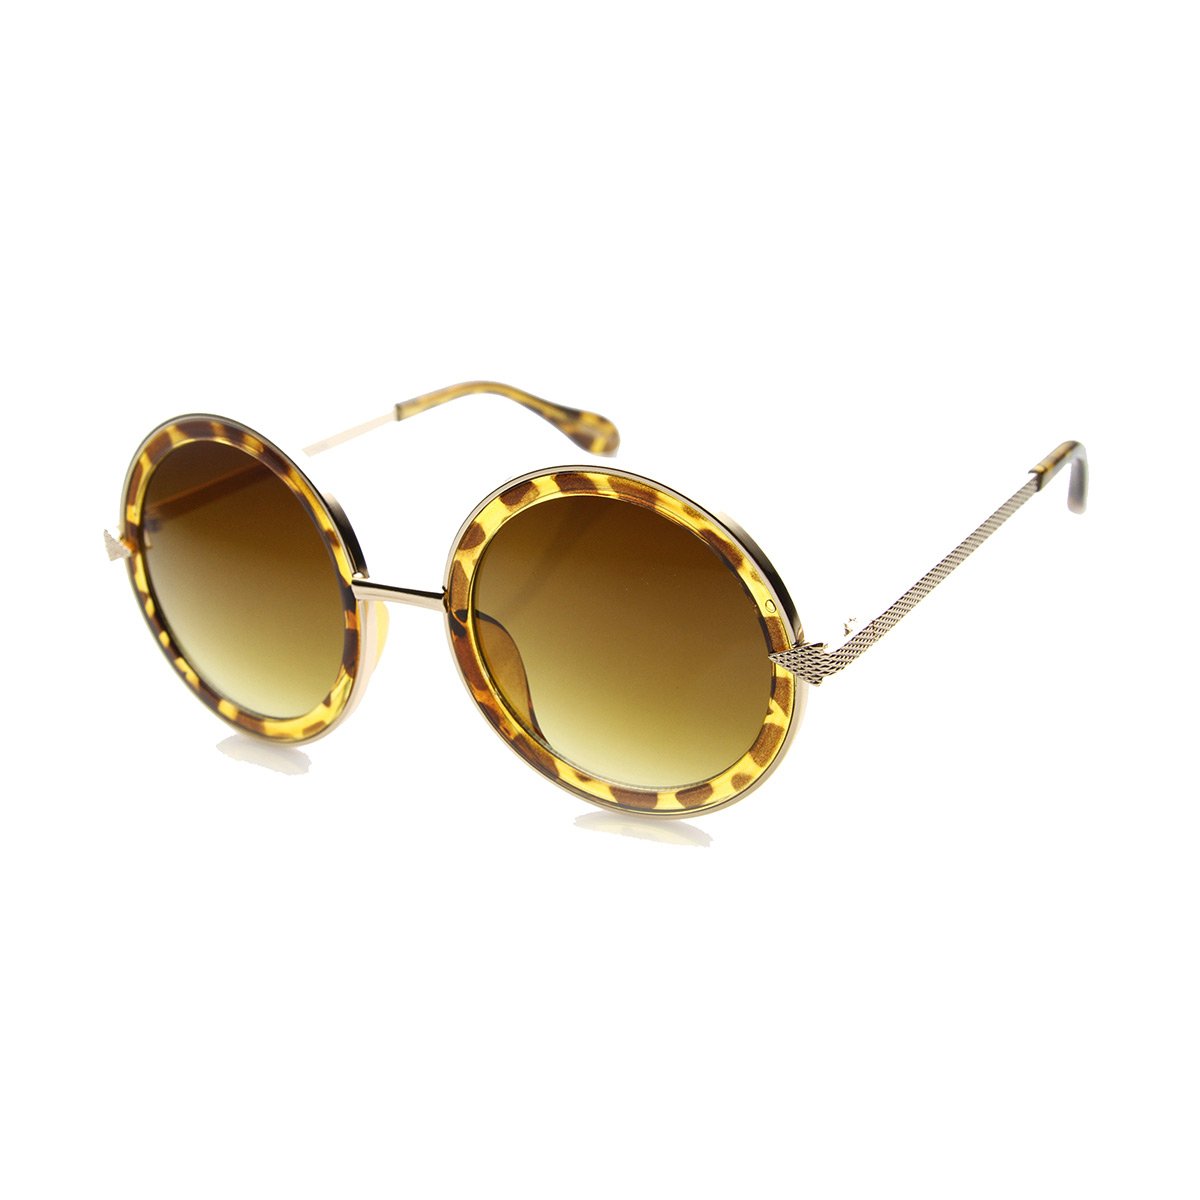 Womens High Fashion Metal Arrow Accent Super Round Sunglasses 9791 - Shiny Black-Gold / Amber